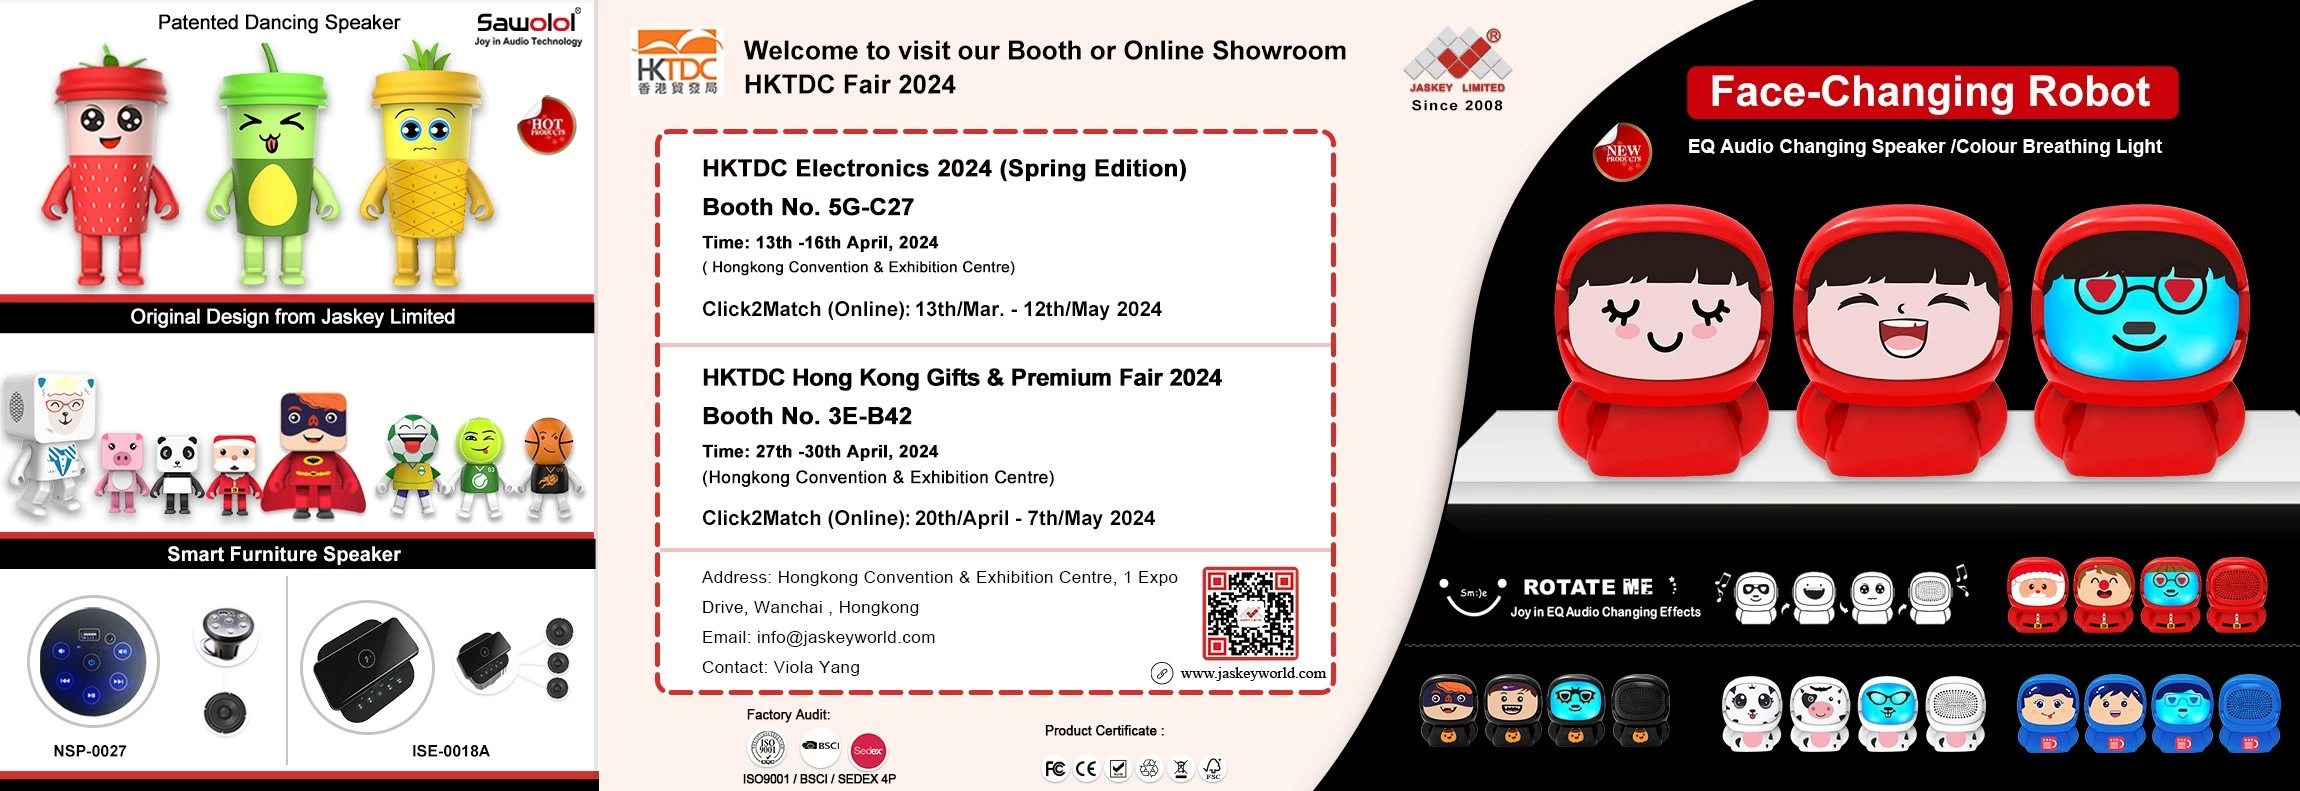 HKTDC Electronics 2024 (Spring Edition) and HKTDC Hong Kong Gifts & Premium Fair 2024